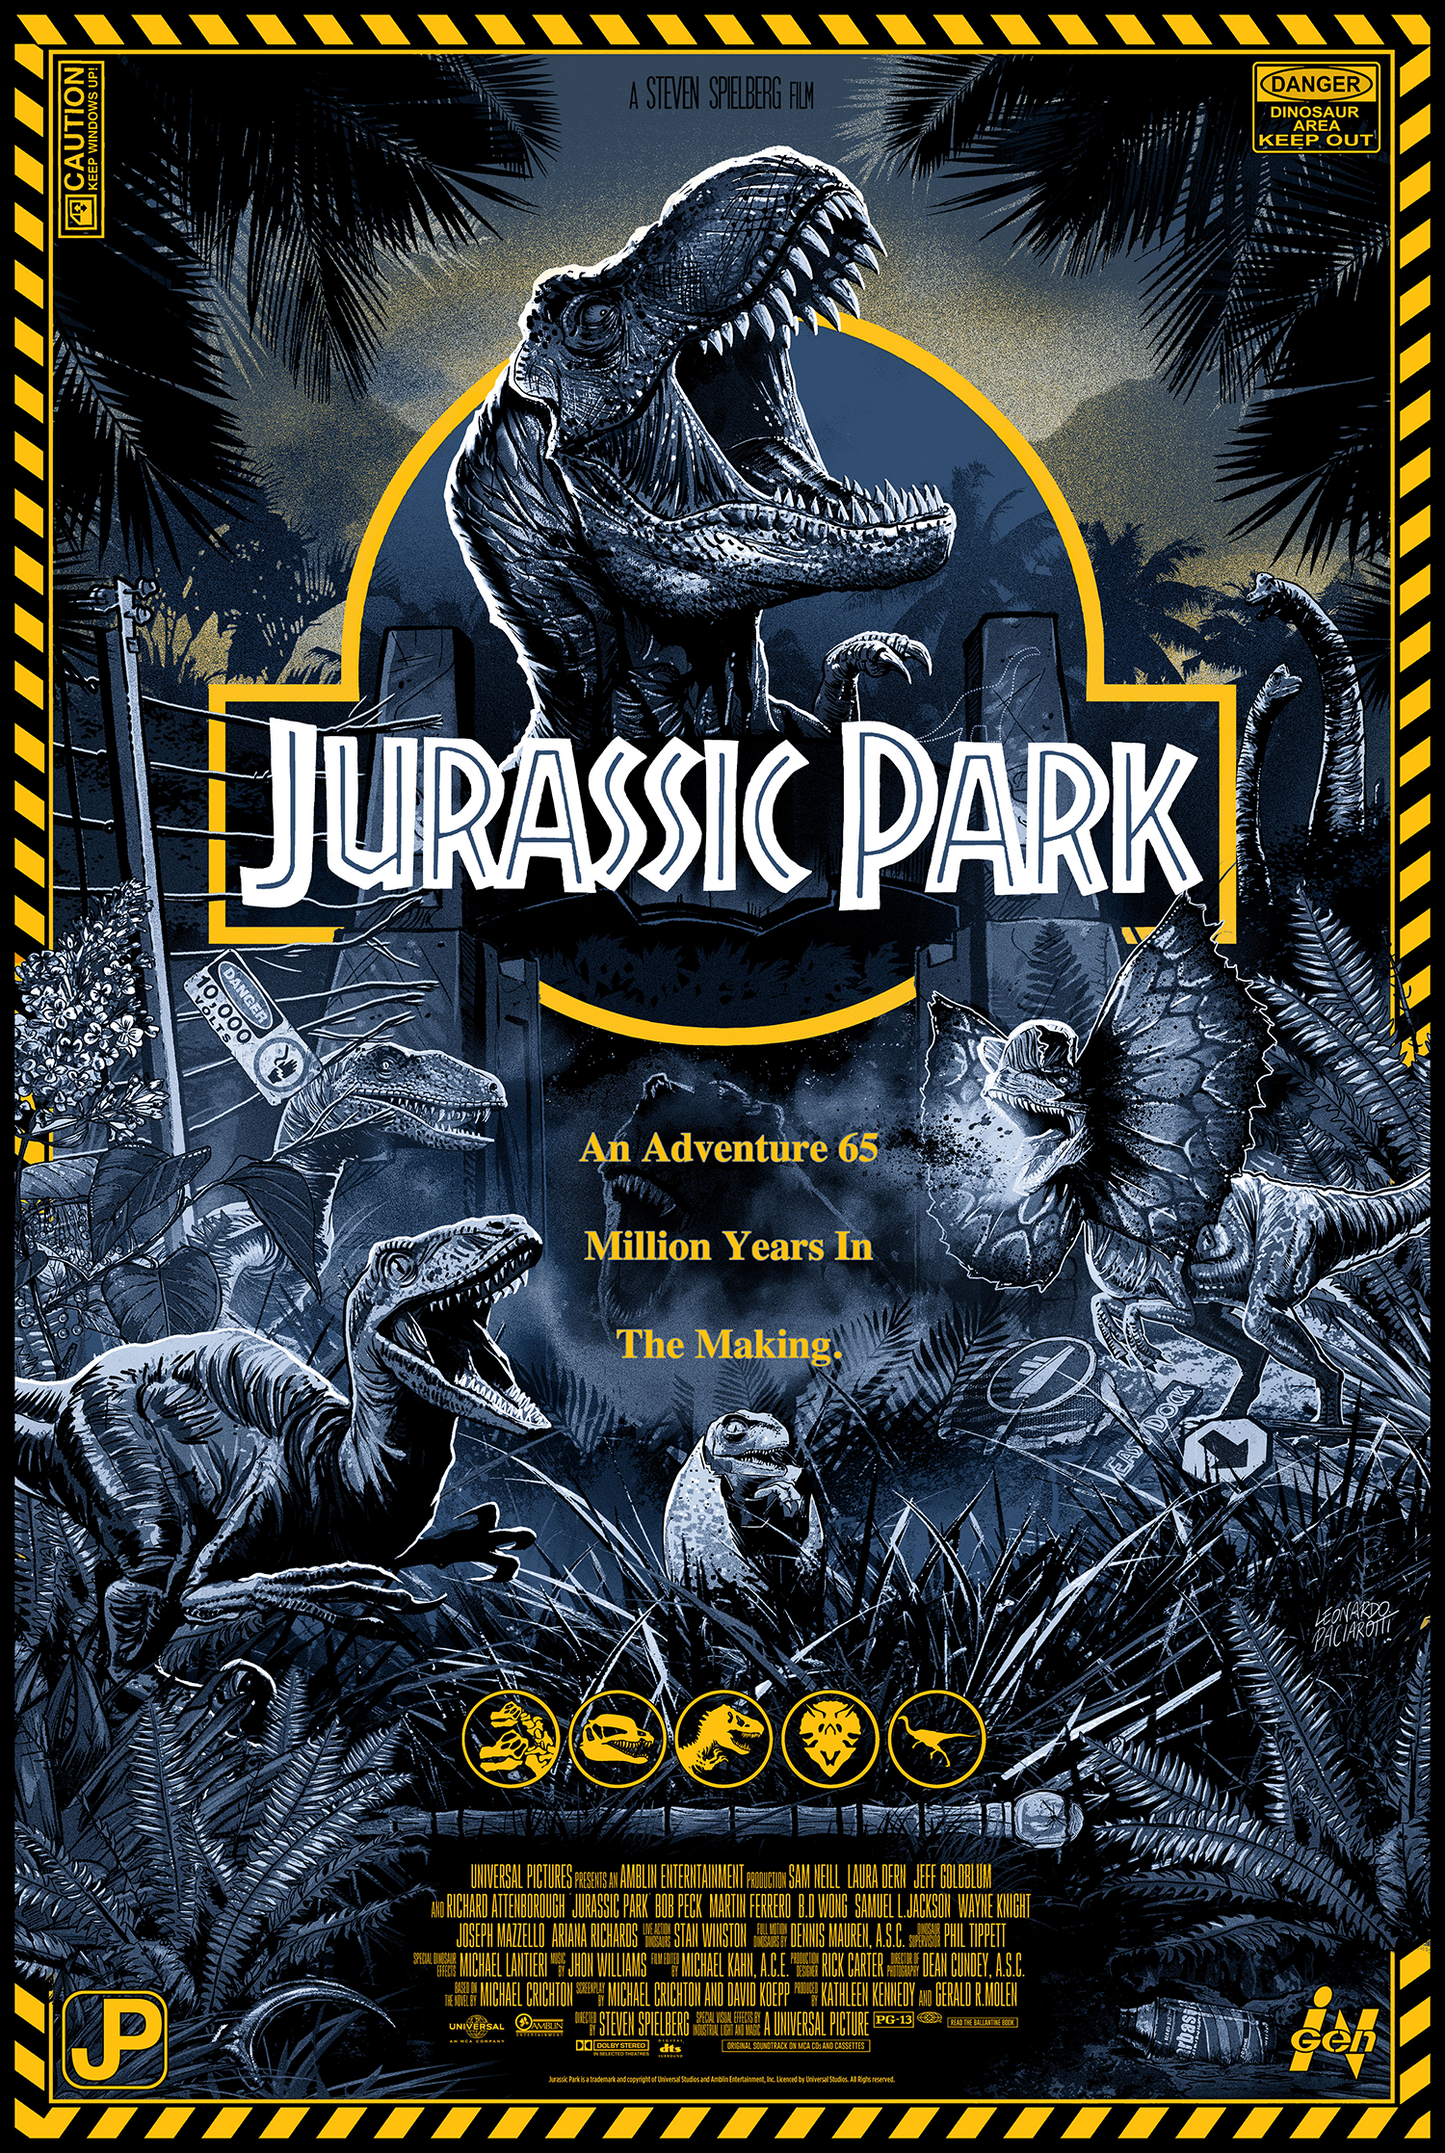 Leonardo Paciarotti "Jurassic Park" Variant